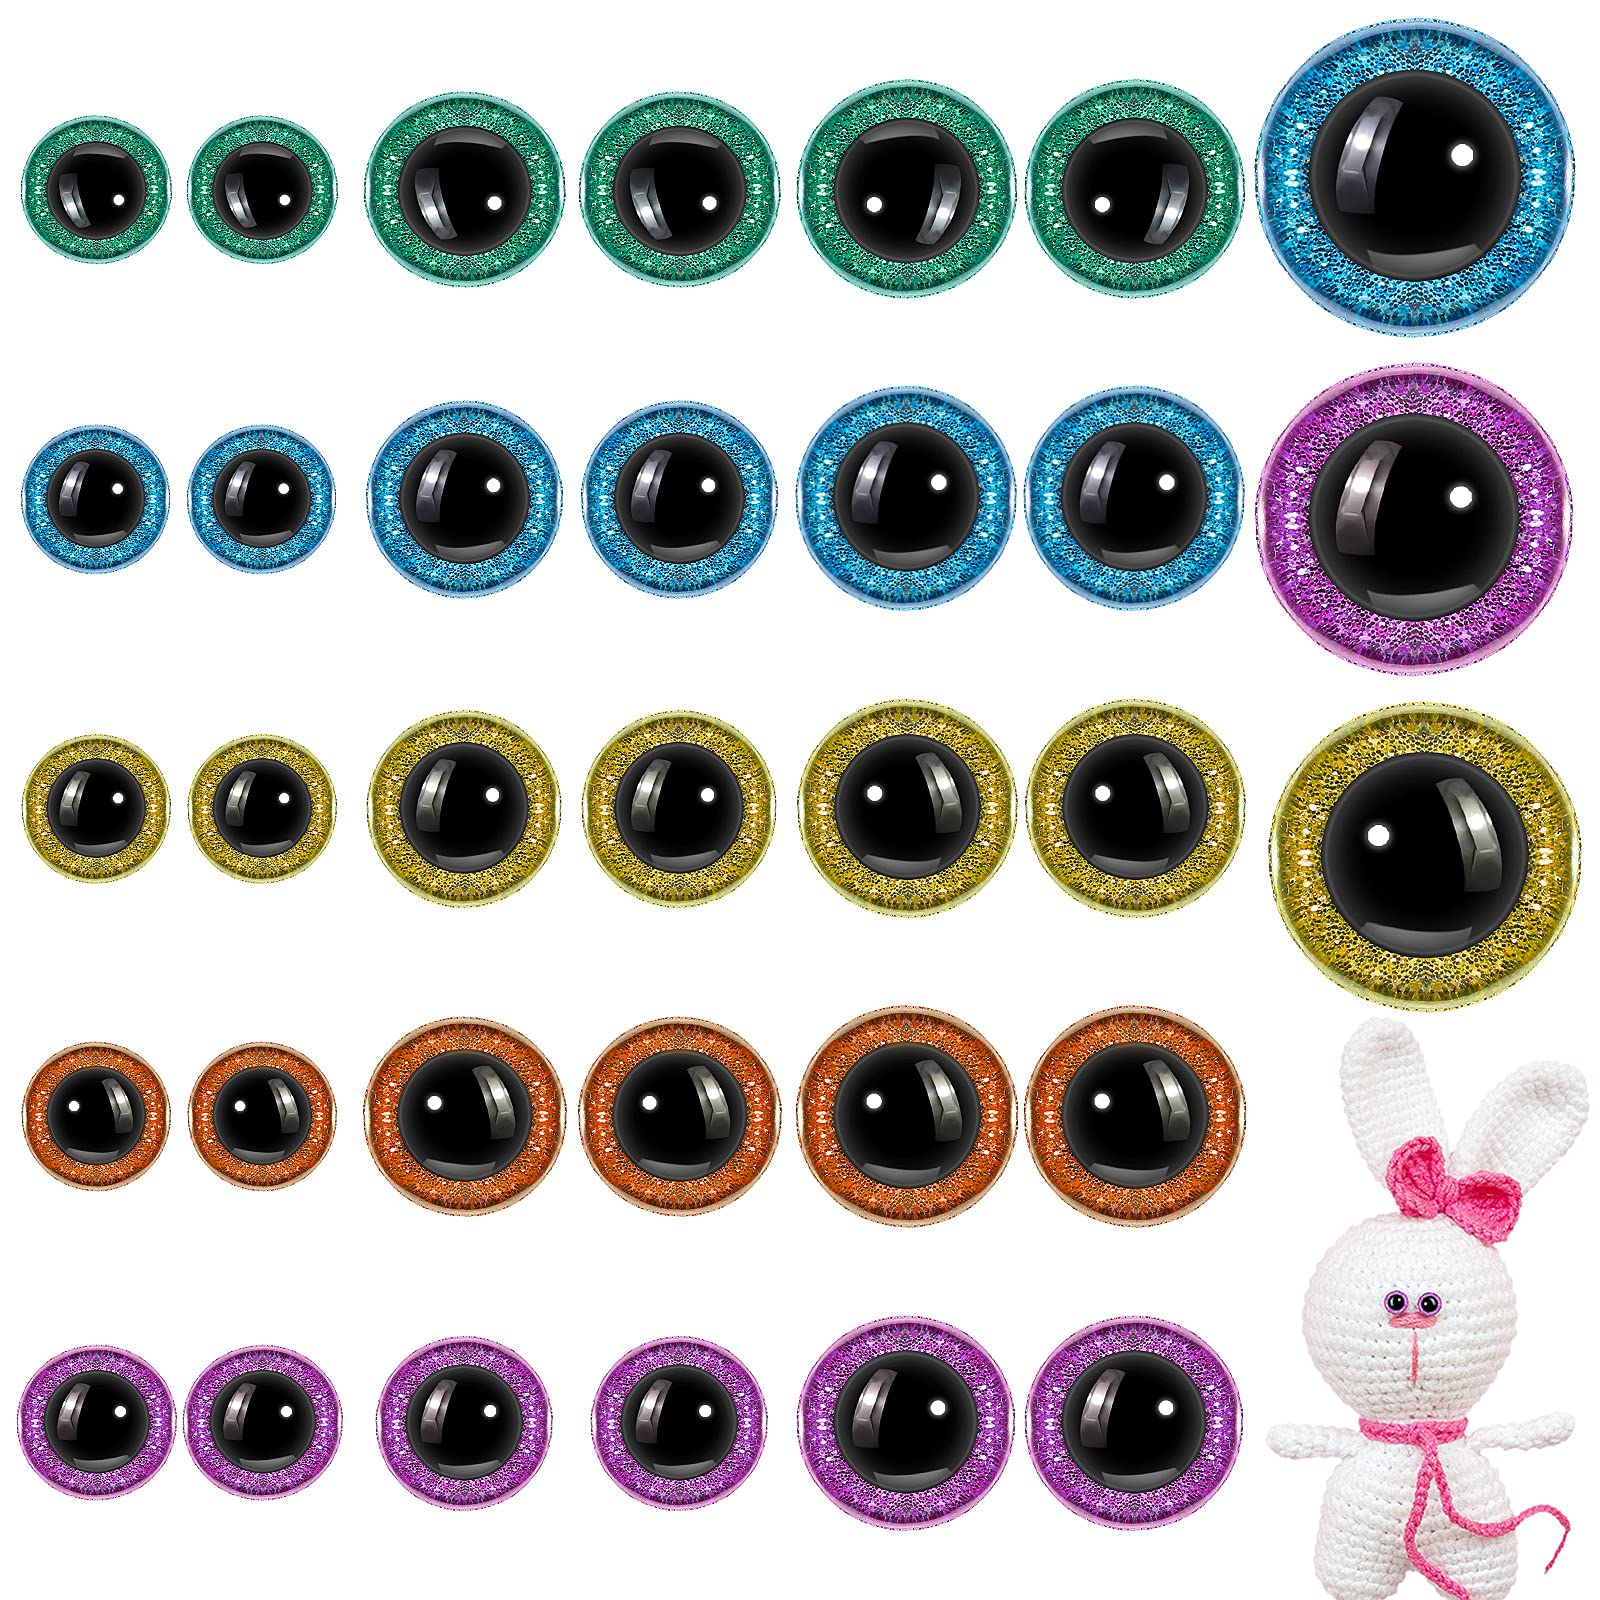 Buy YASY Safety Eyes for Amigurumi Crochet,Kawaii Crafts Doll Eyes